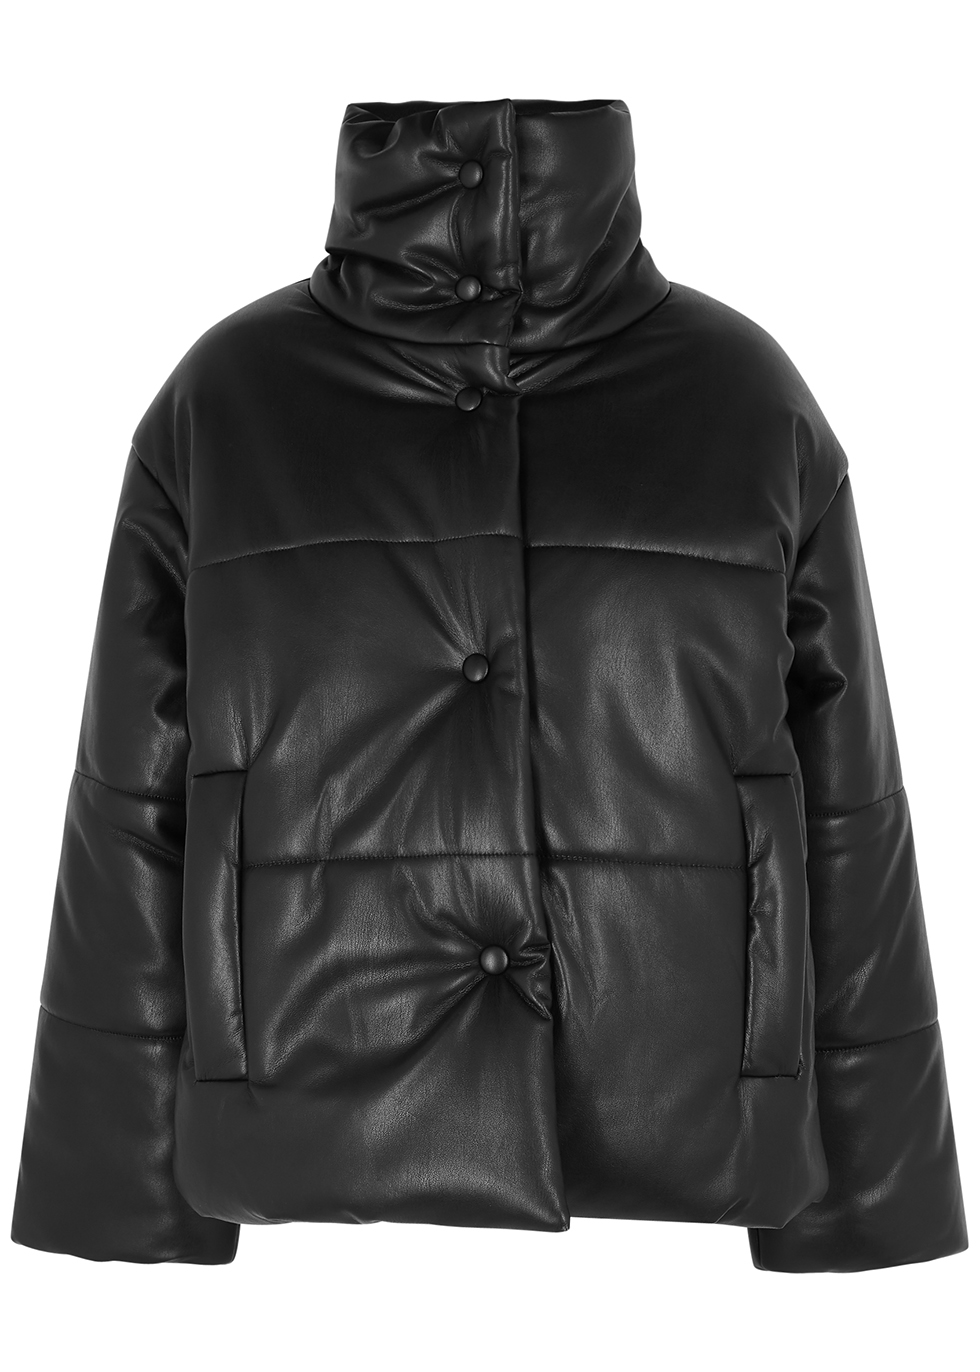 Hide black faux leather jacket